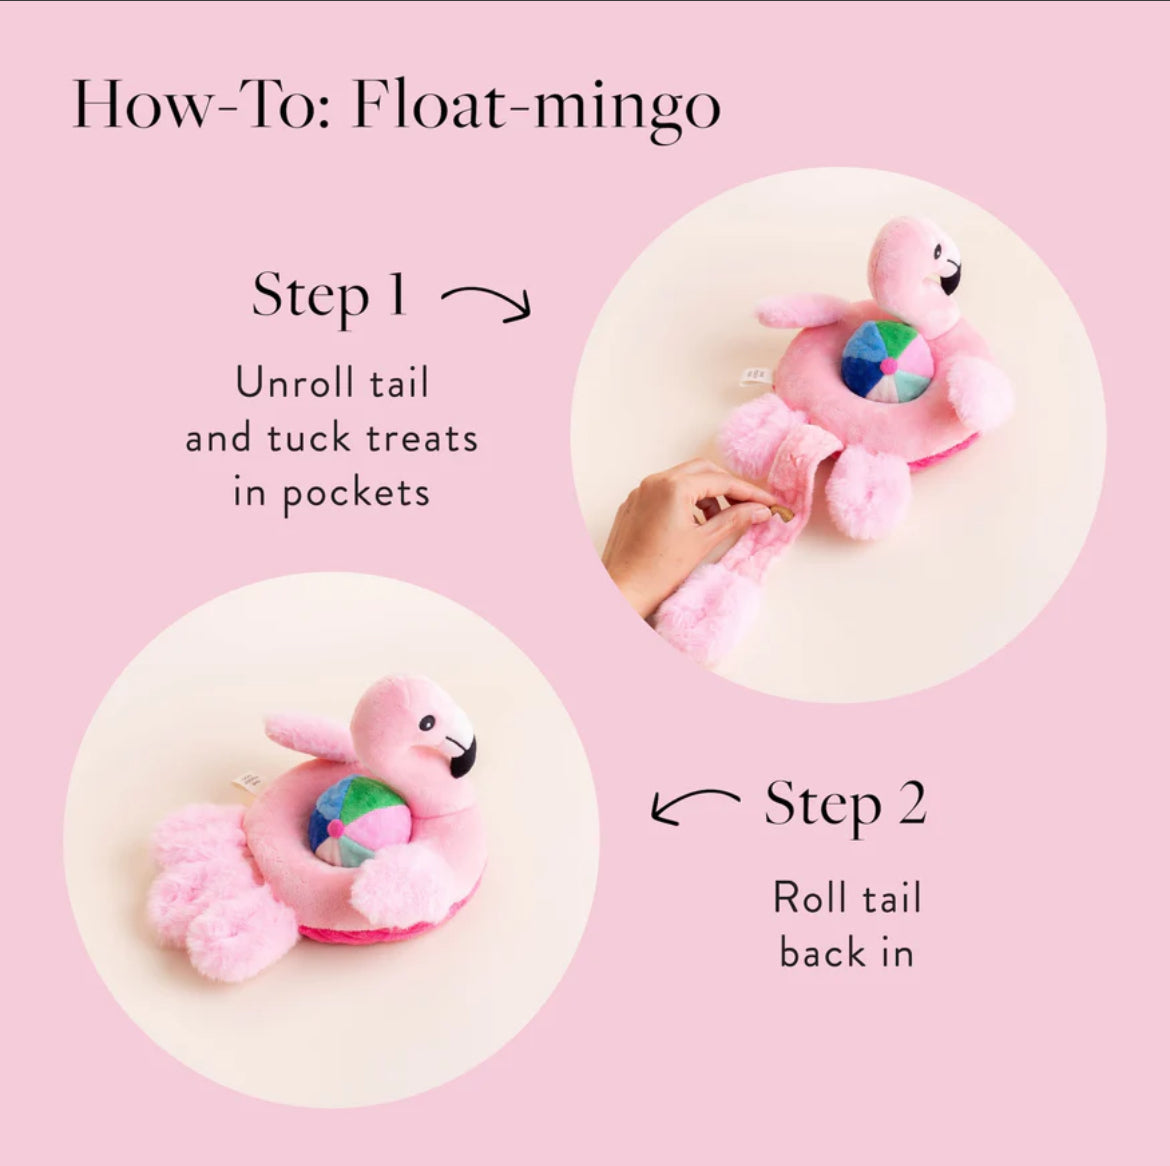 Float-mingo Interactive Snuffle Dog Toy